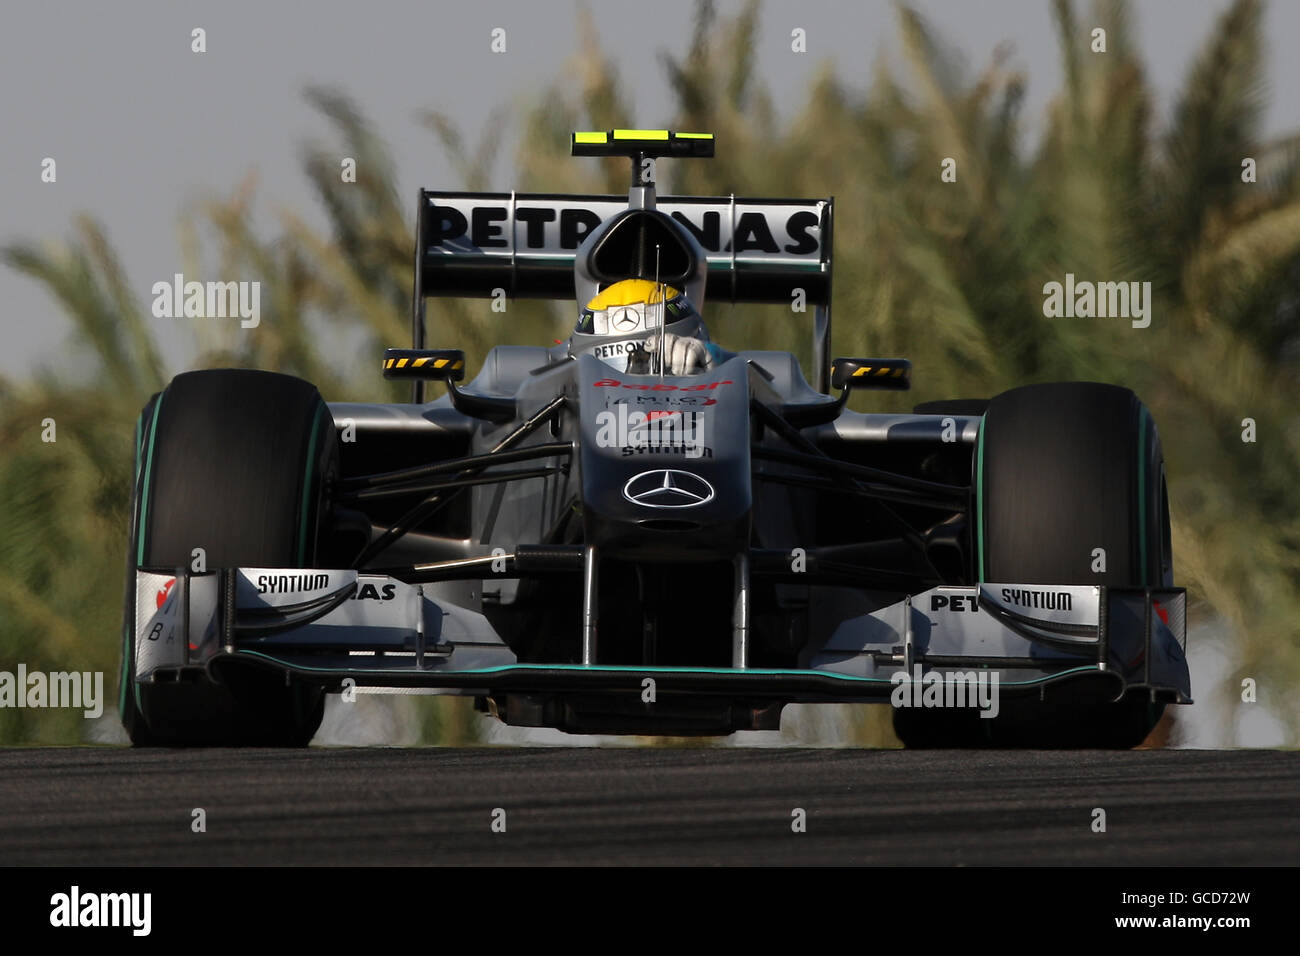 Mercedes' Nico Rosberg during the Gulf Air Bahrain Grand Prix at the Bahrain International Circuit in Sakhir, Bahrain Stock Photo